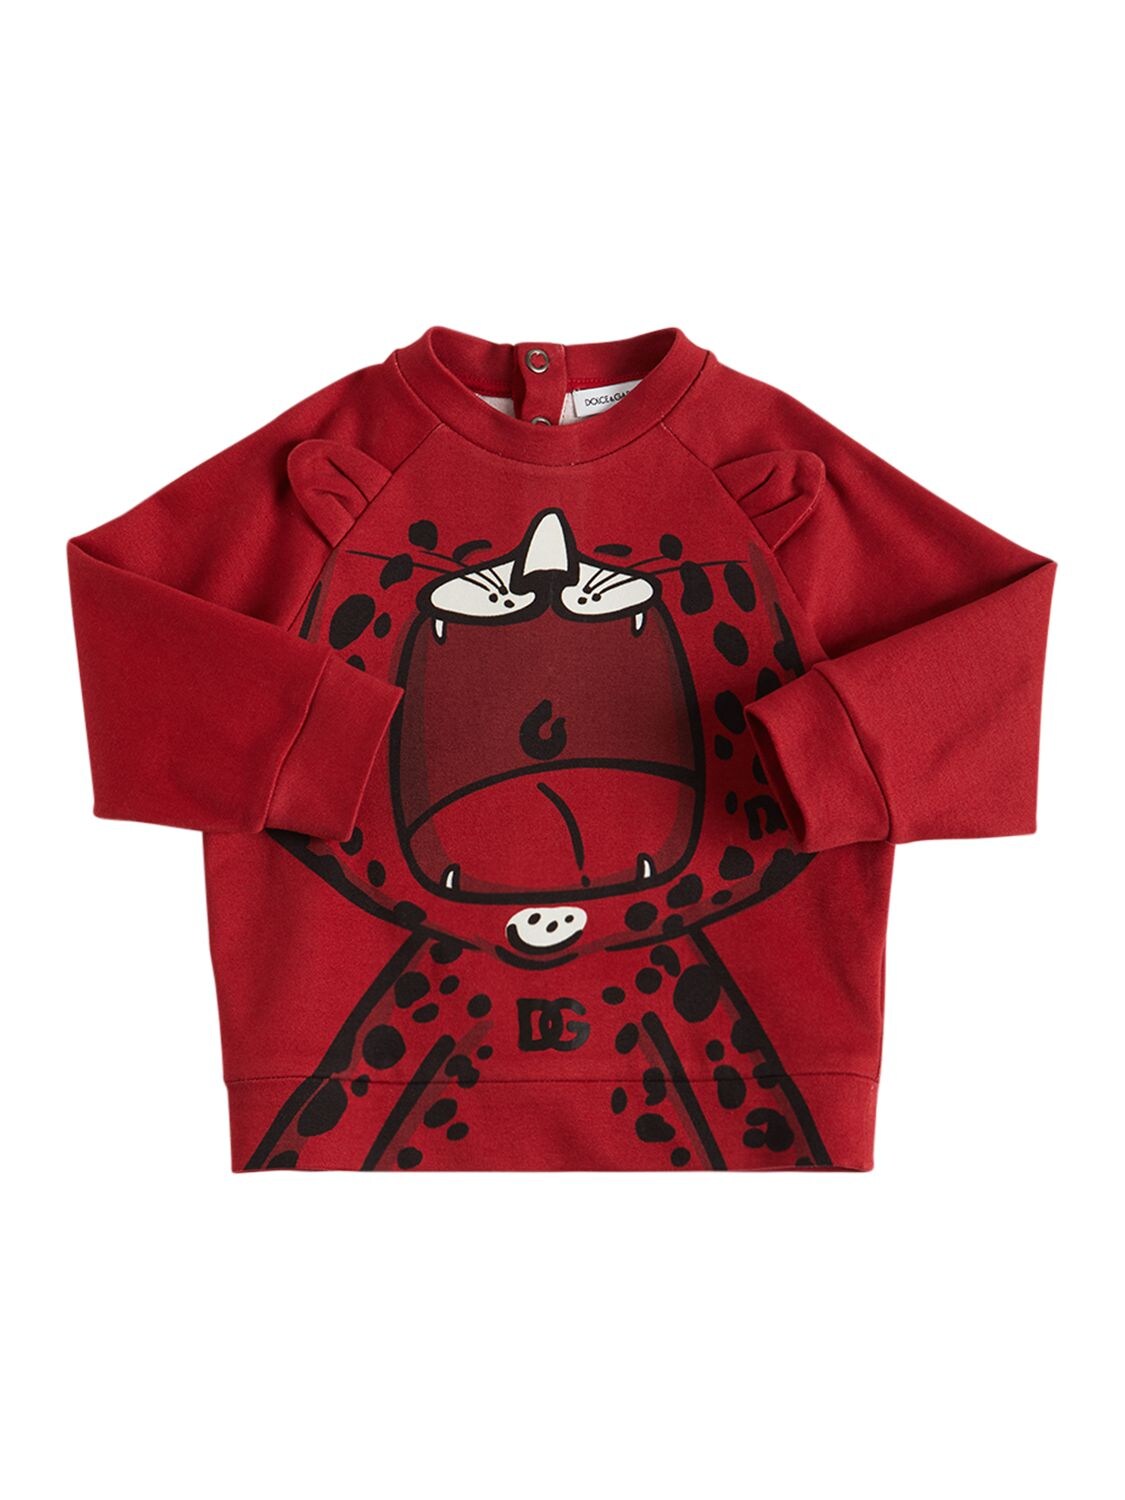 Dolce & Gabbana Babies' Printed Cotton Sweatshirt In Red